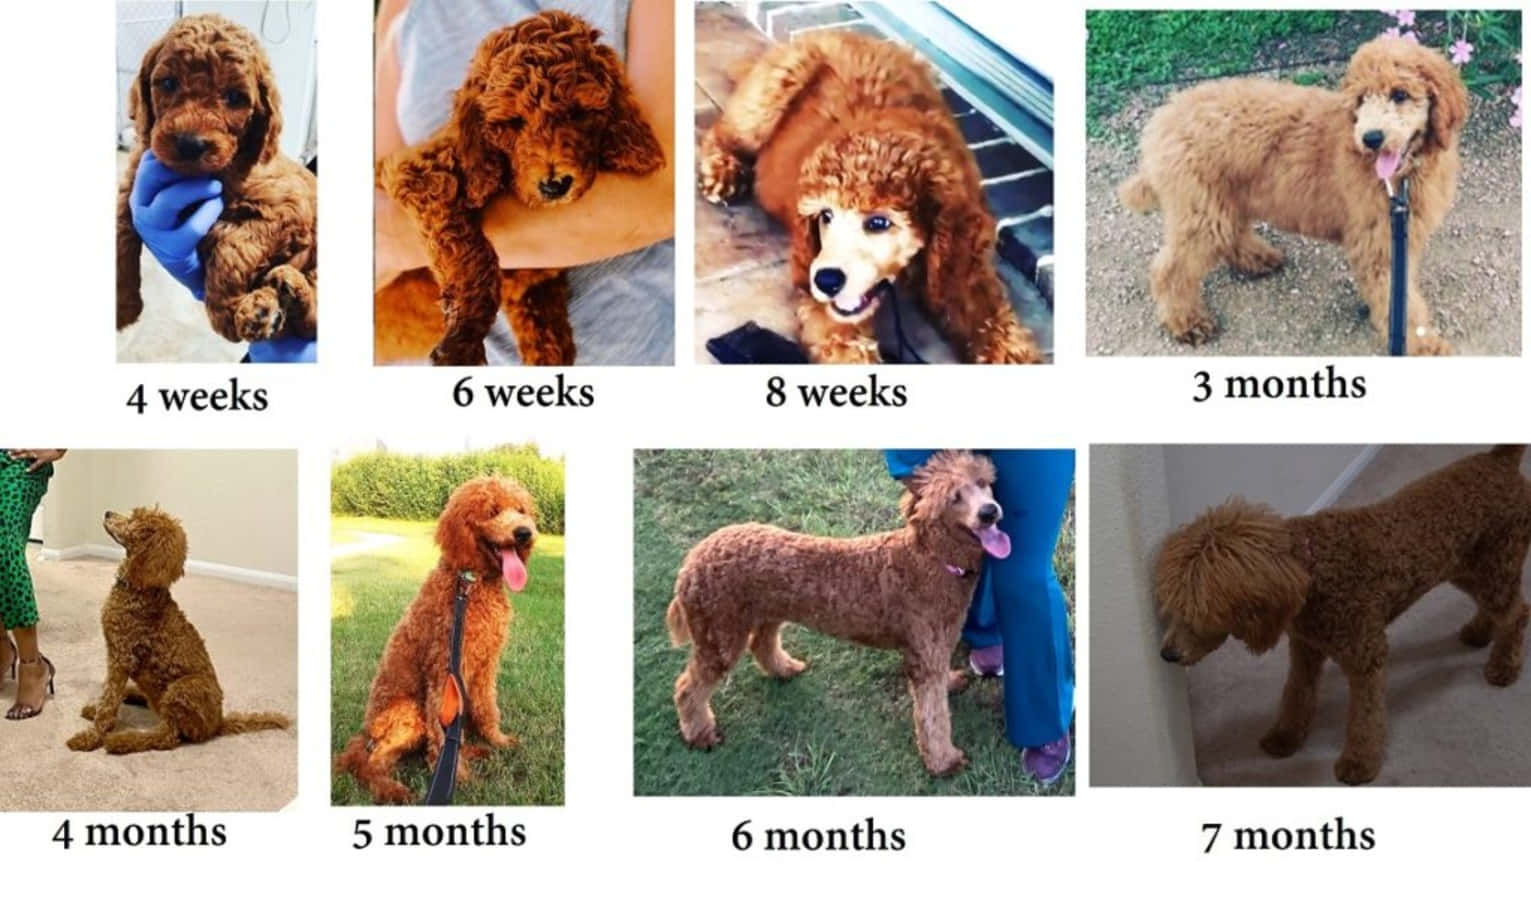 Adorable Puppy Growing up Week by Week